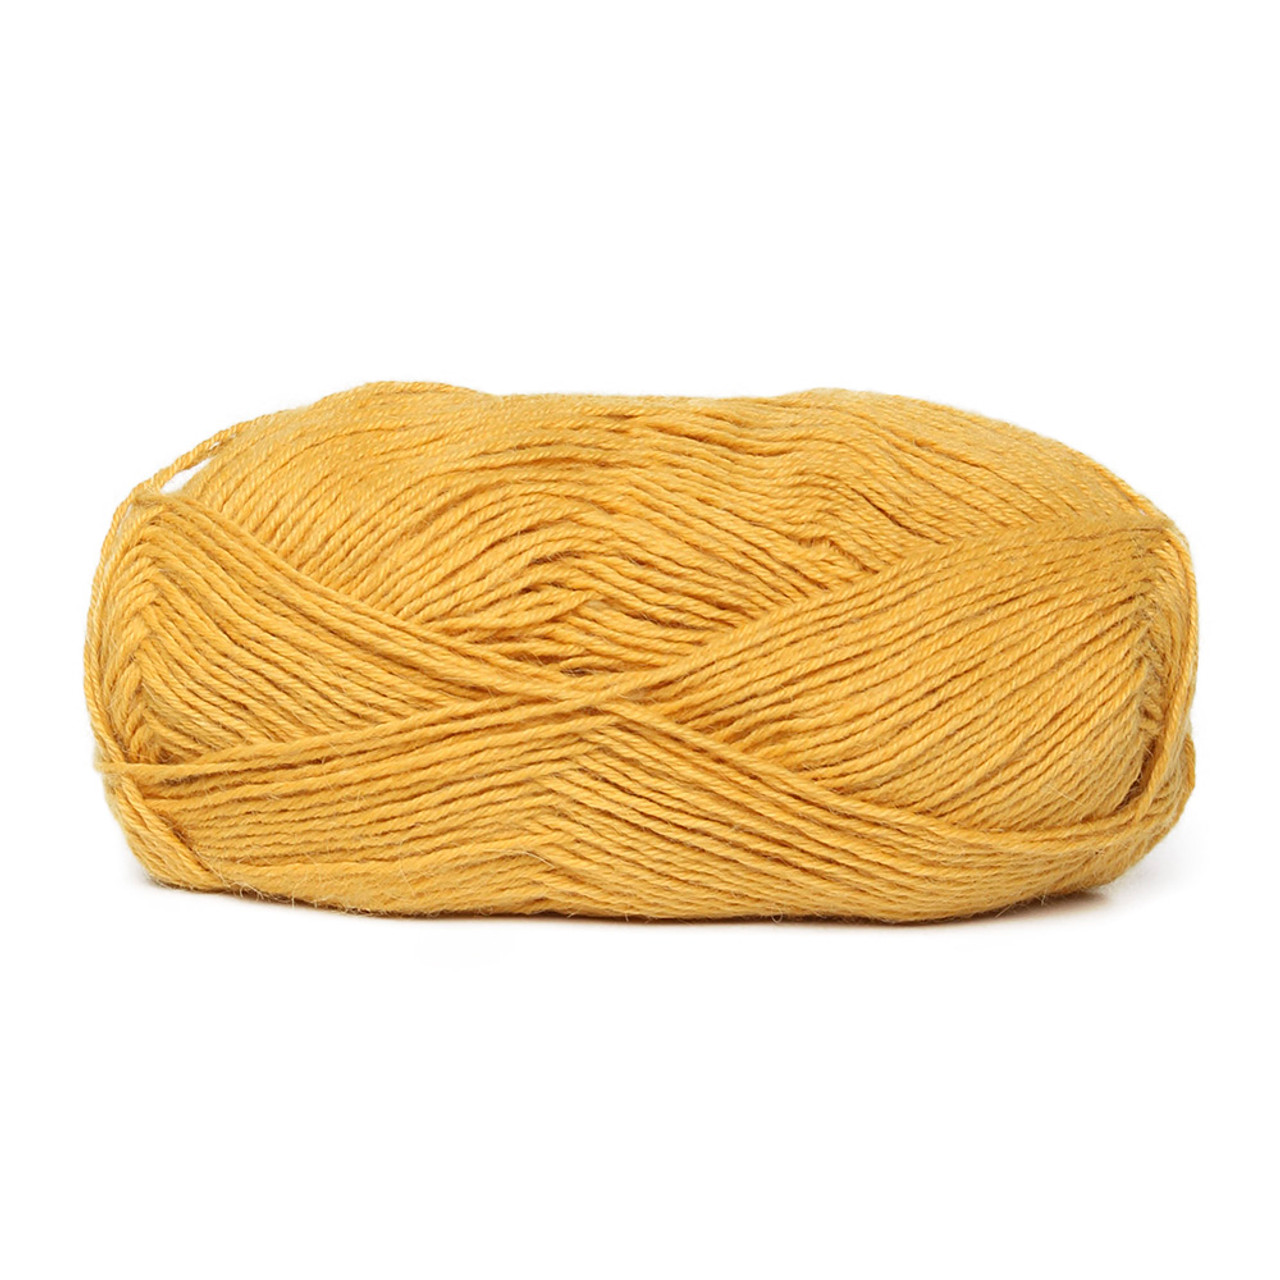 Alpaca Nylon Blend Yarn #1 Lace/Fingering - 290 Yards Total - ONE Skein